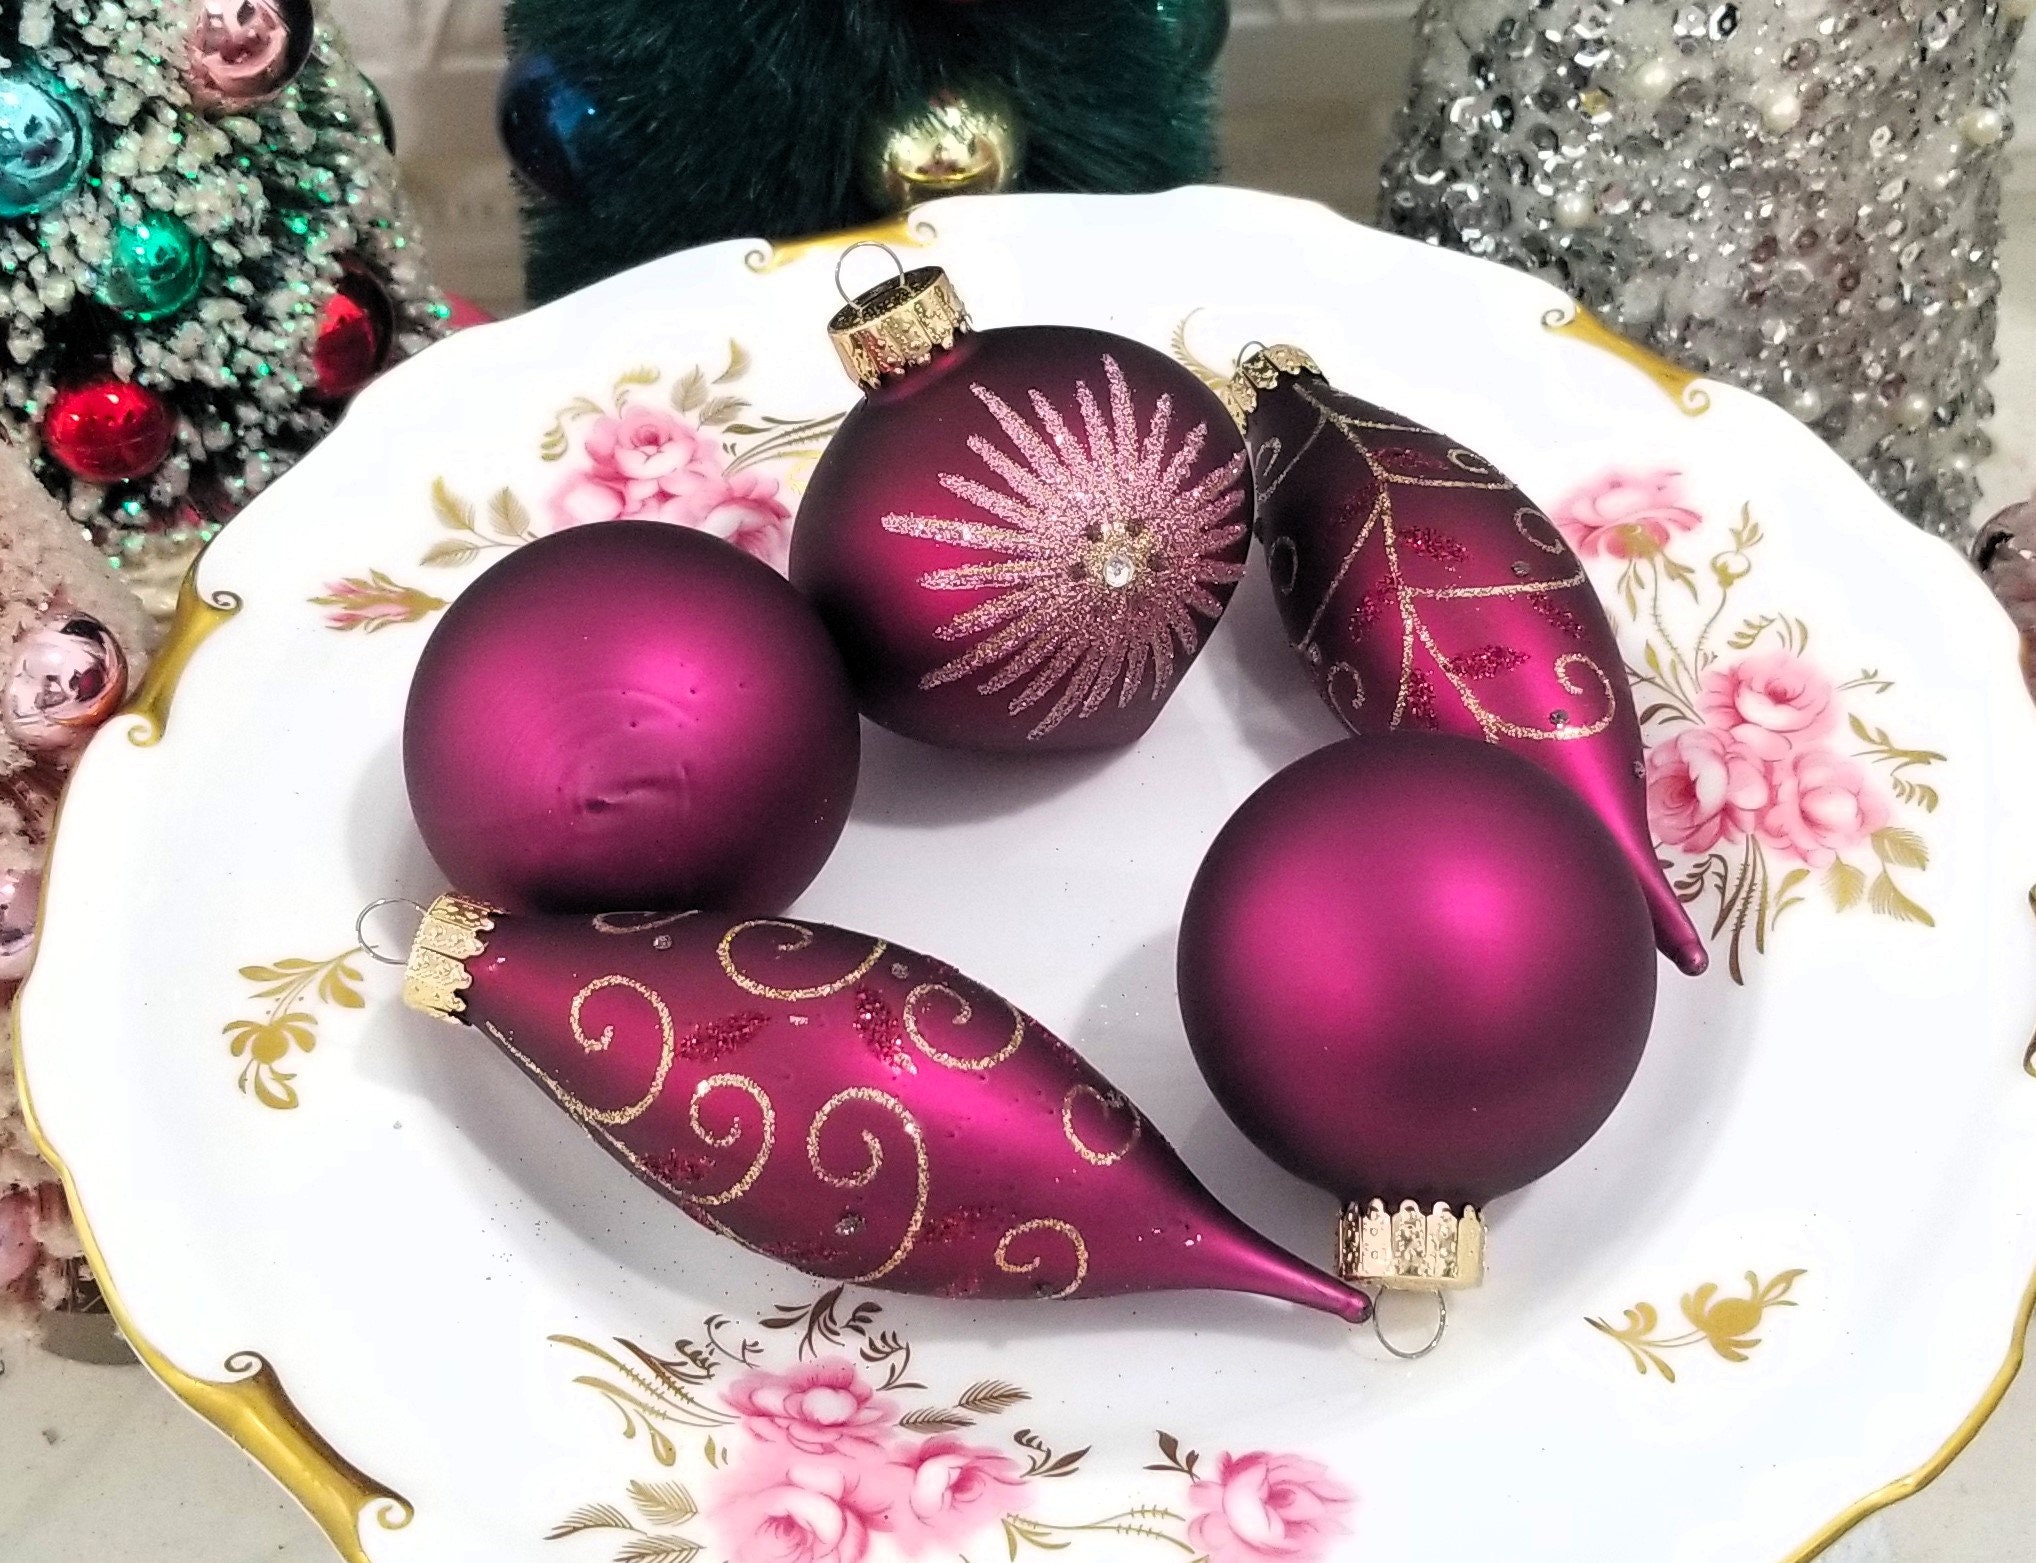 Christmas by Krebs - Plastic Shatterproof Ornament Decoration - Purple Onion with Glitter Swirls